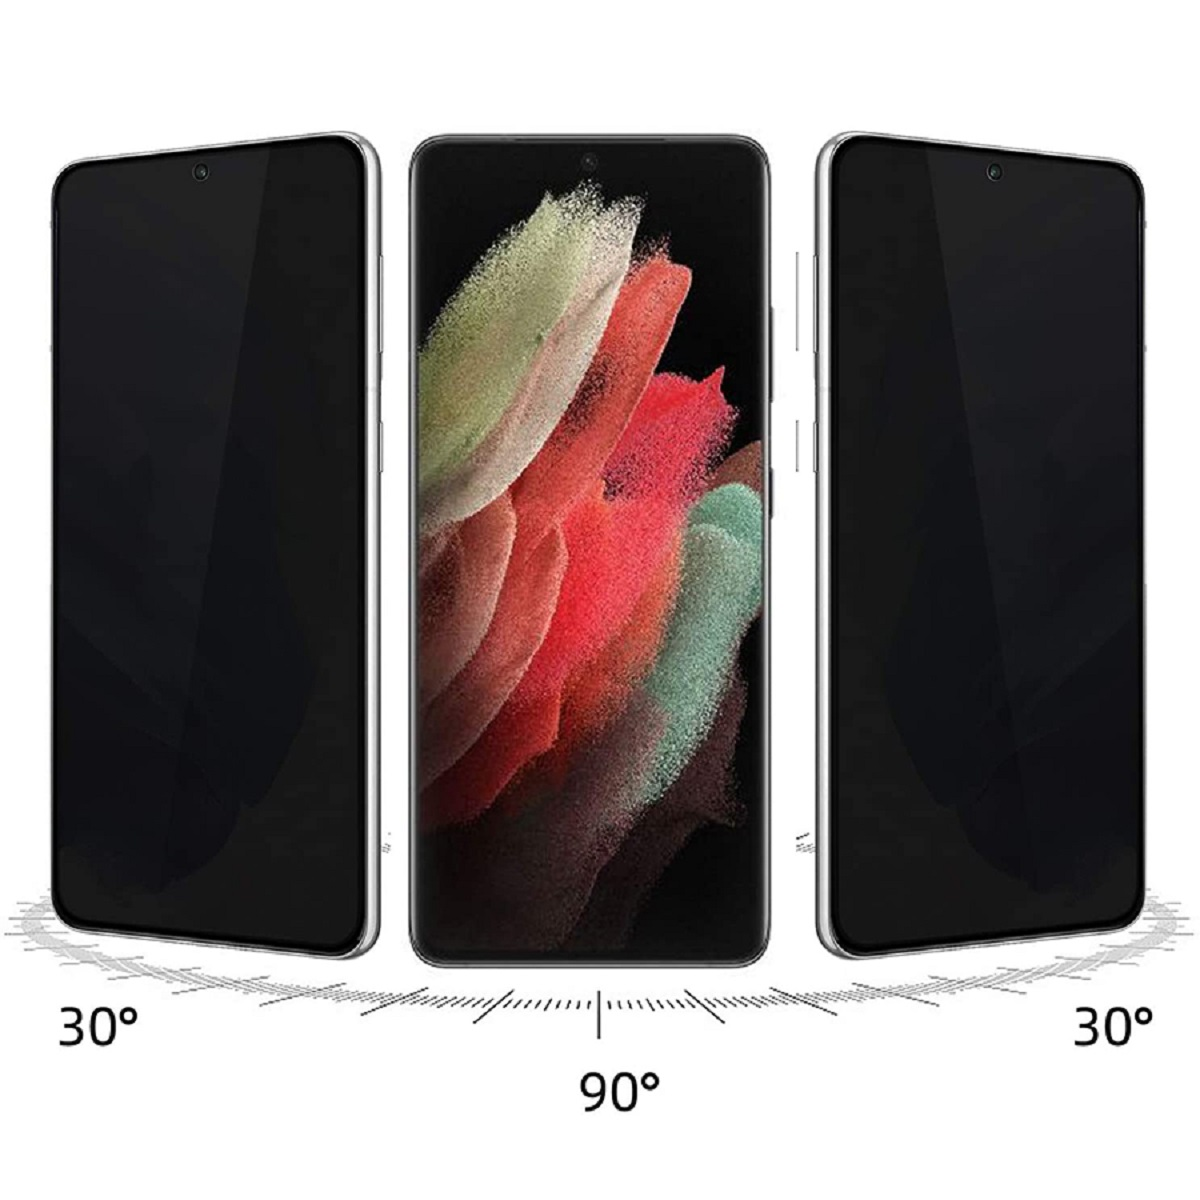 Samsung Galaxy Panzerfolie 2x 9H Hartglas ANTI-SPY S23 Displayschutzfolie(für Plus) PROTECTORKING Schutzglas